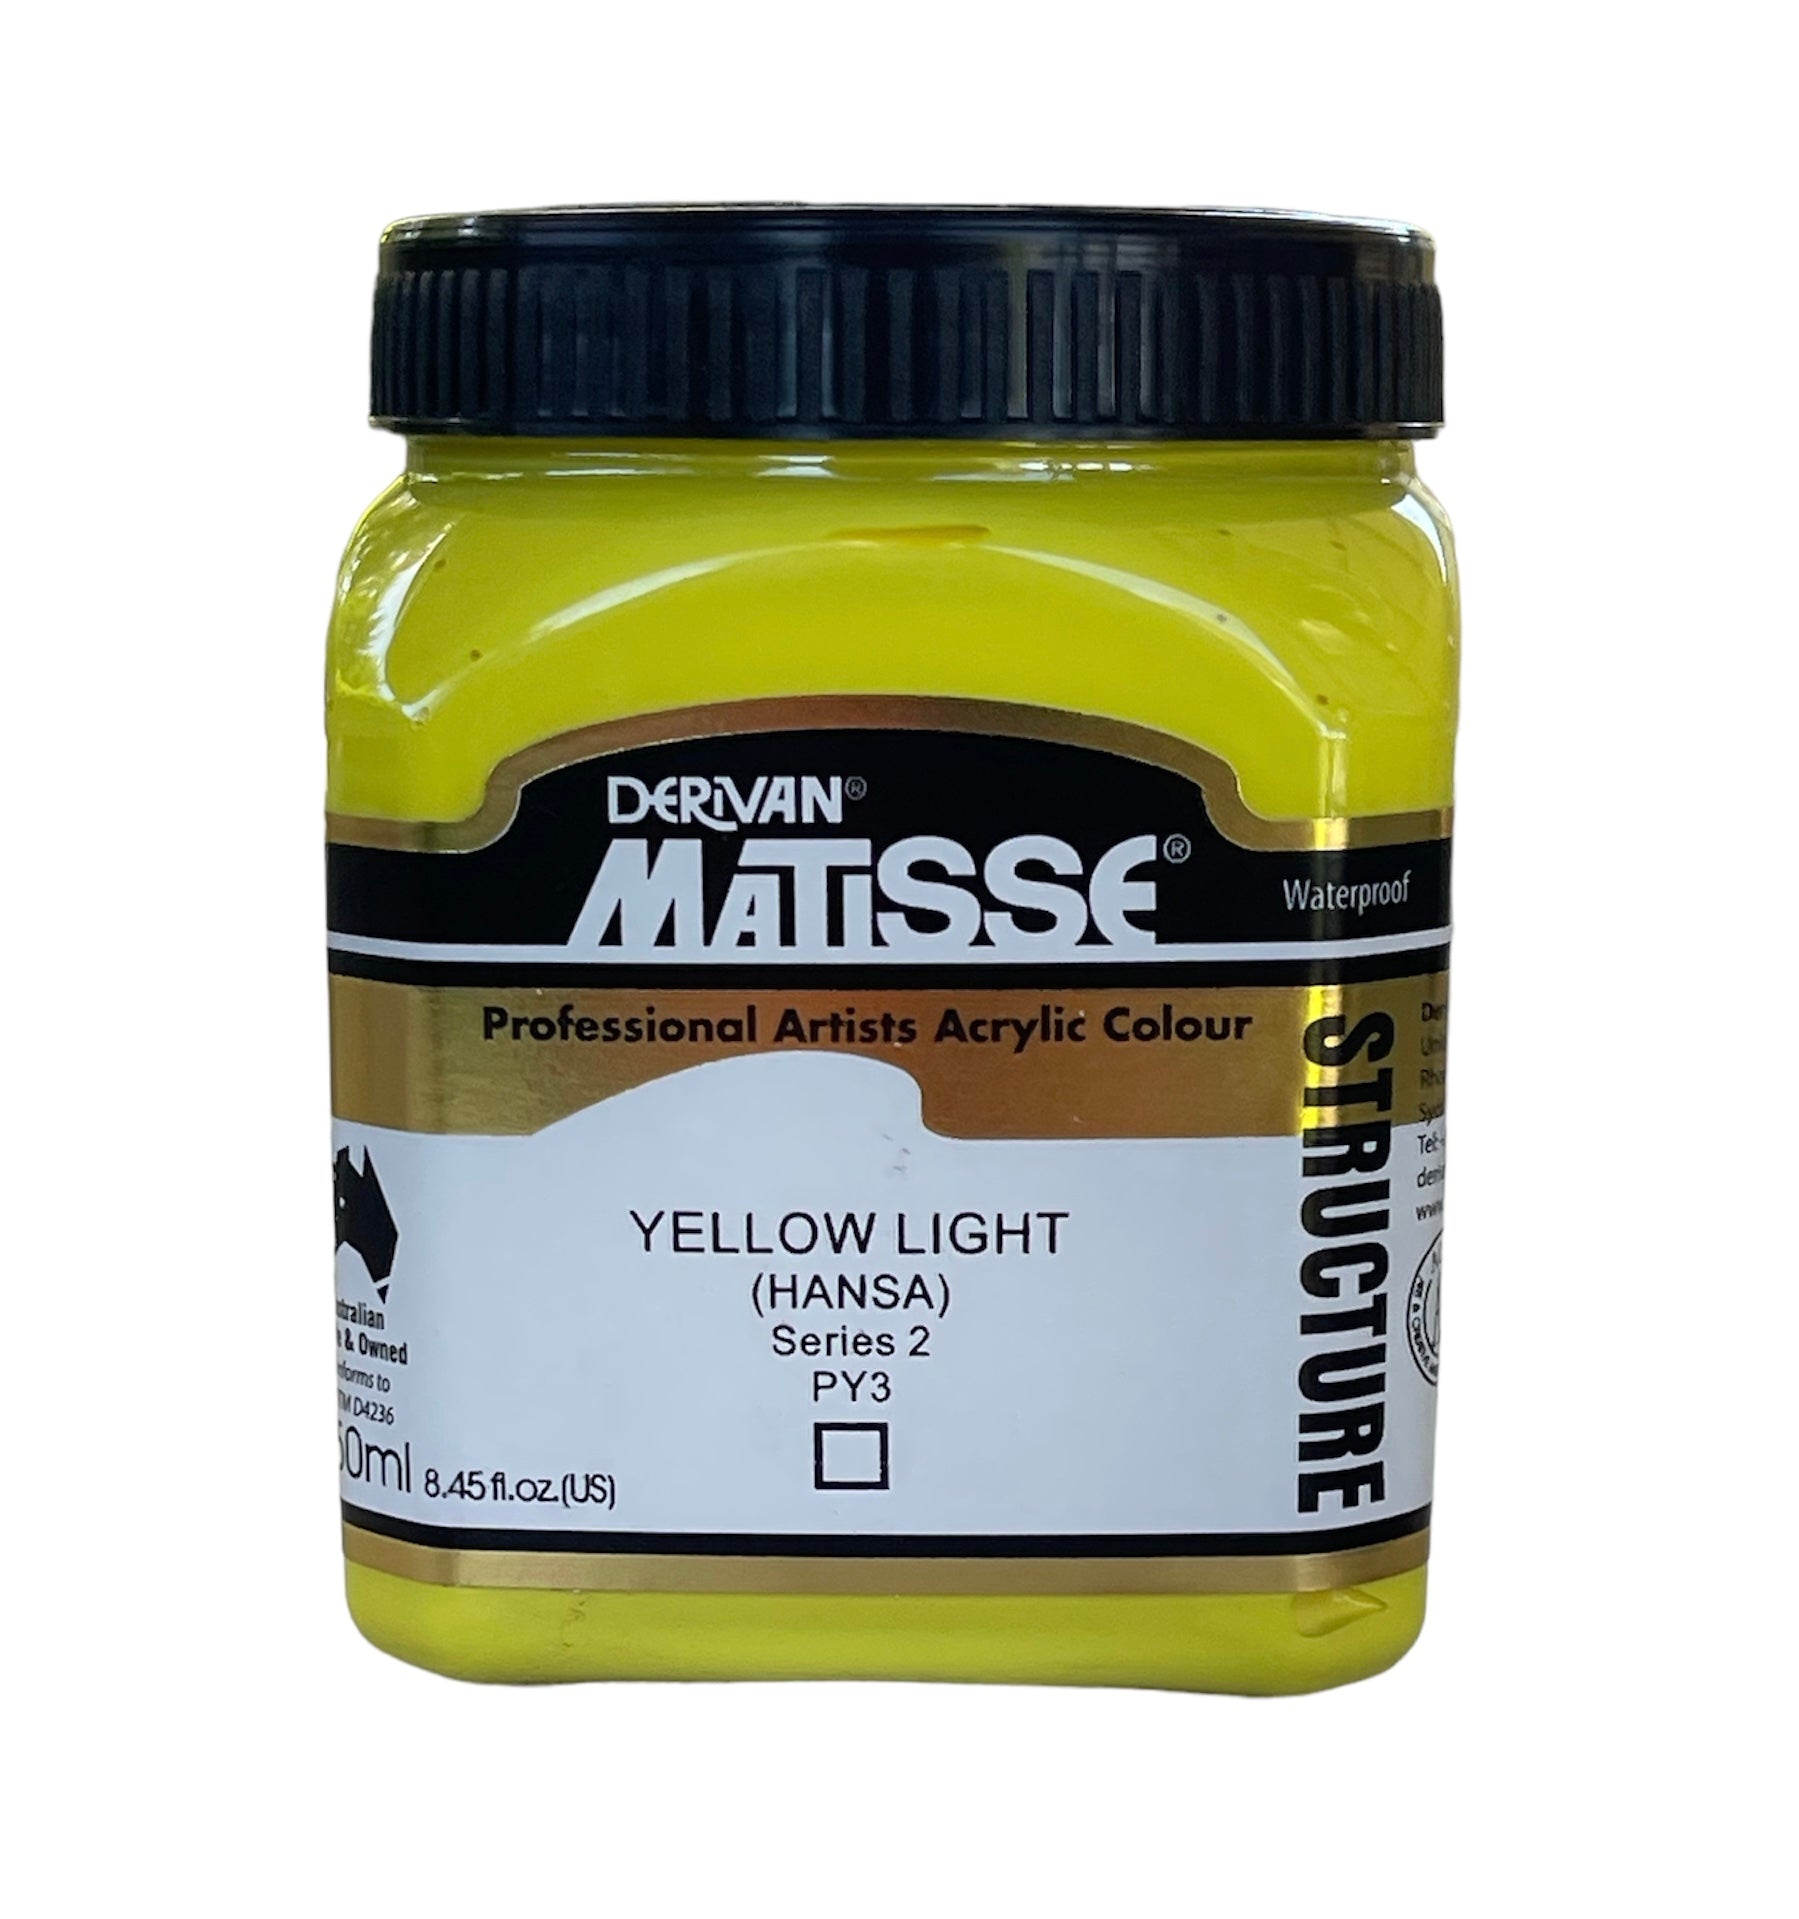 Matisse Acrylic Paint - Yellow Light